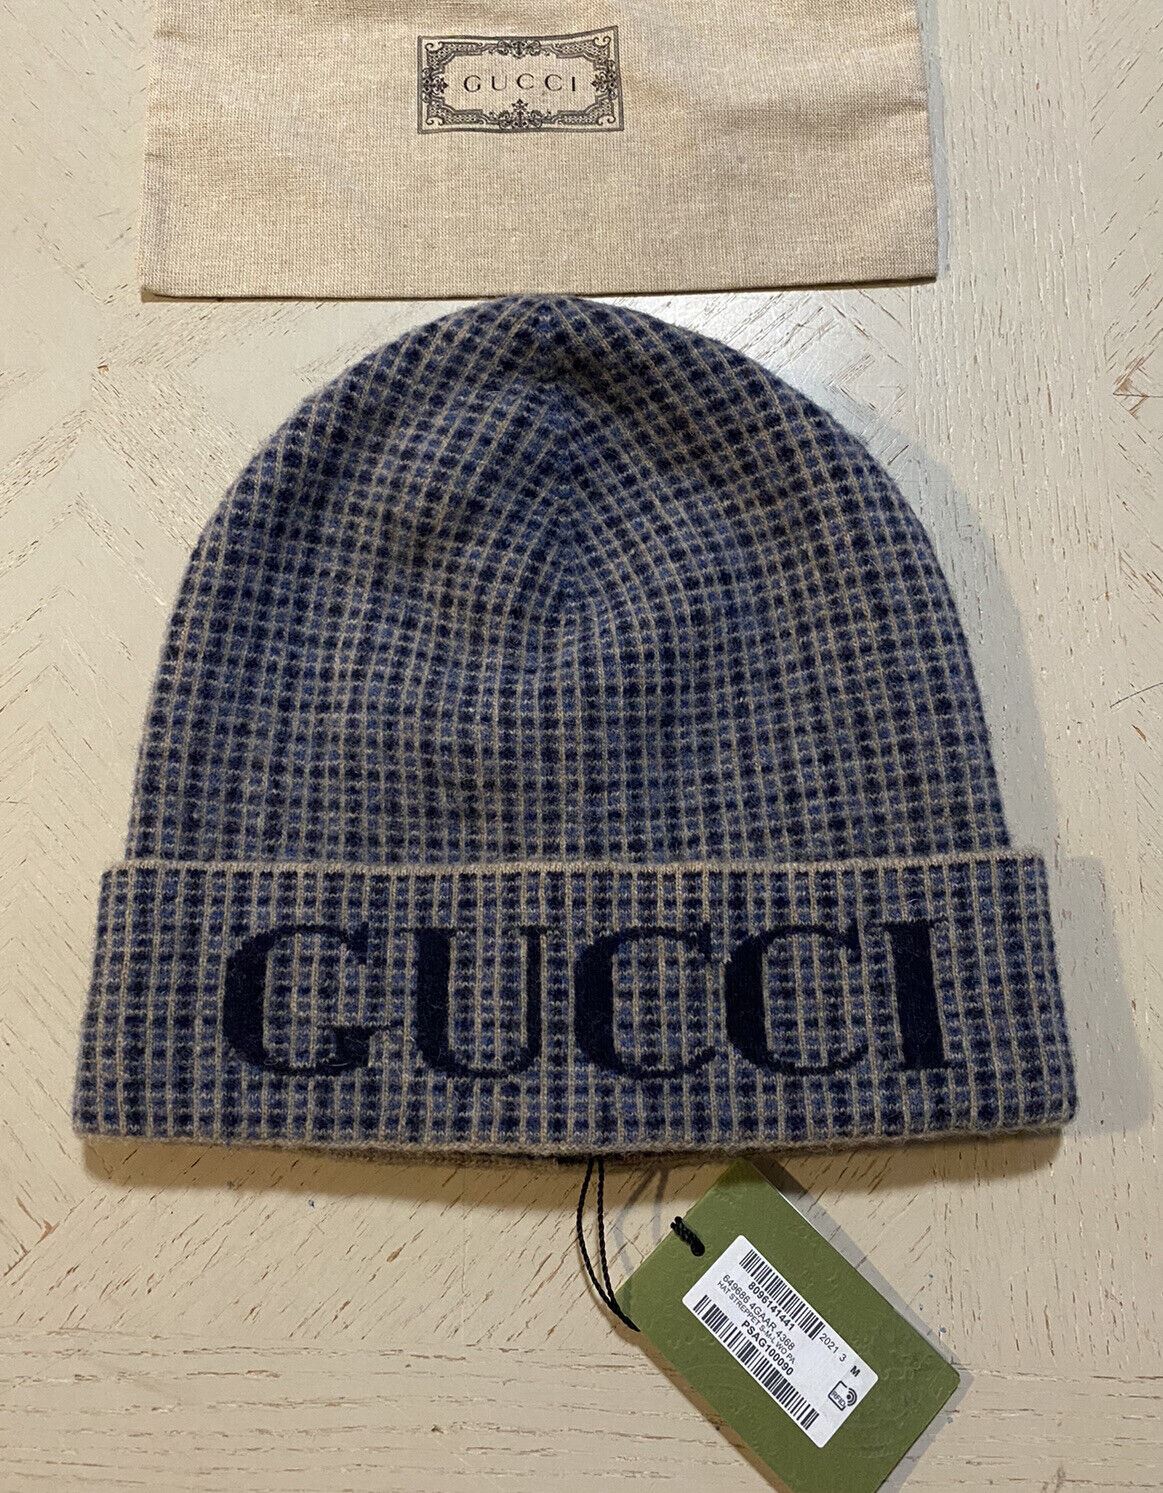 NWT Gucci Шапка-бини Gucci Monogram Hat Коричневый/Черный Размер M Италия